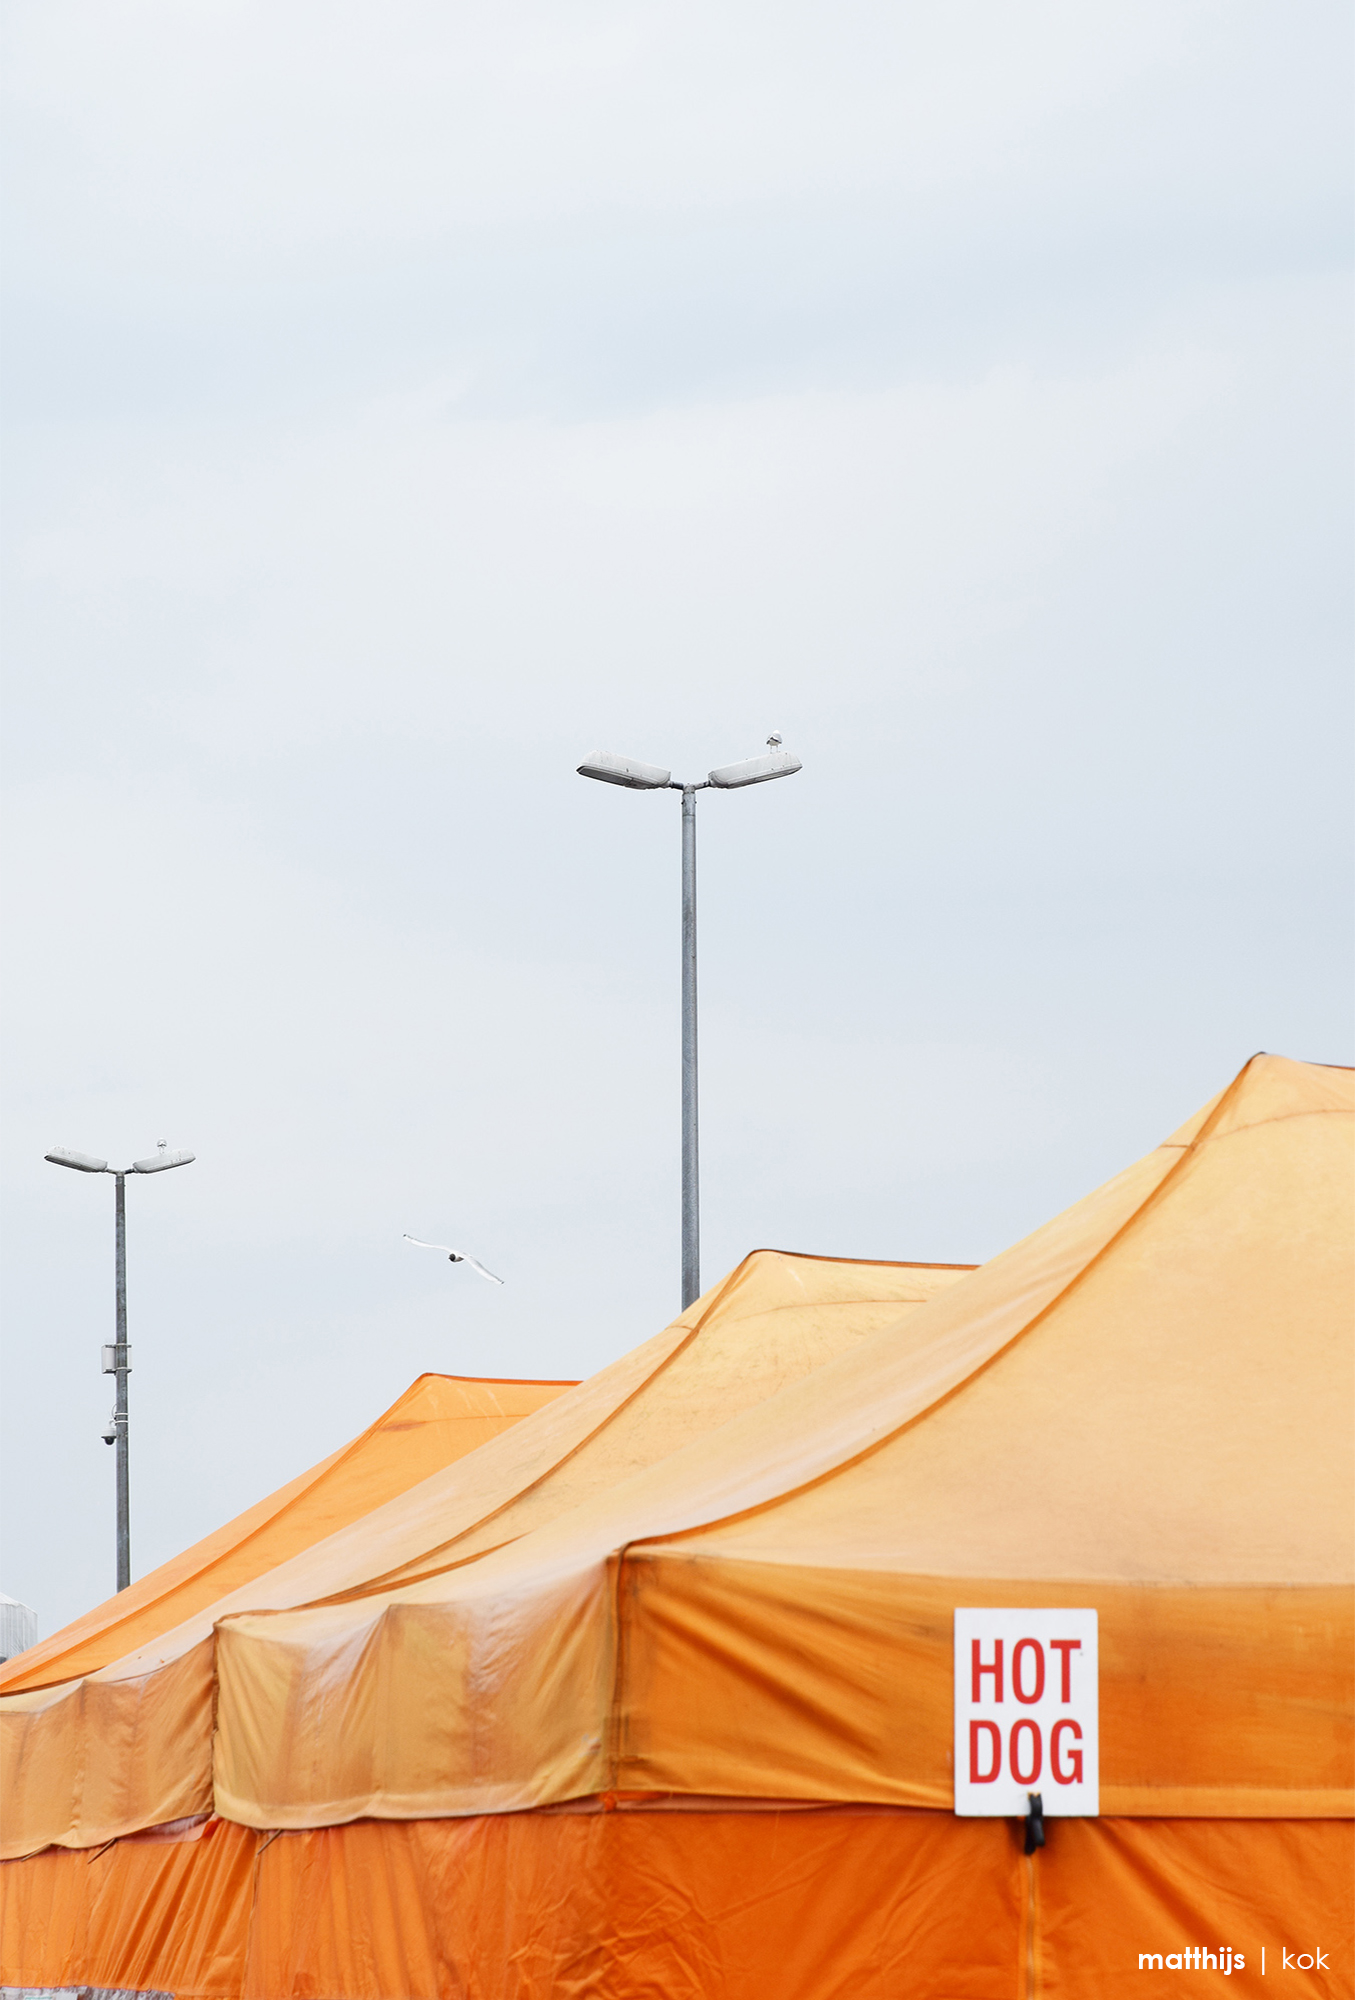 Torikahvilat, the orange tents of Helsinki's market squares, Finland | Photo by Matthijs Kok